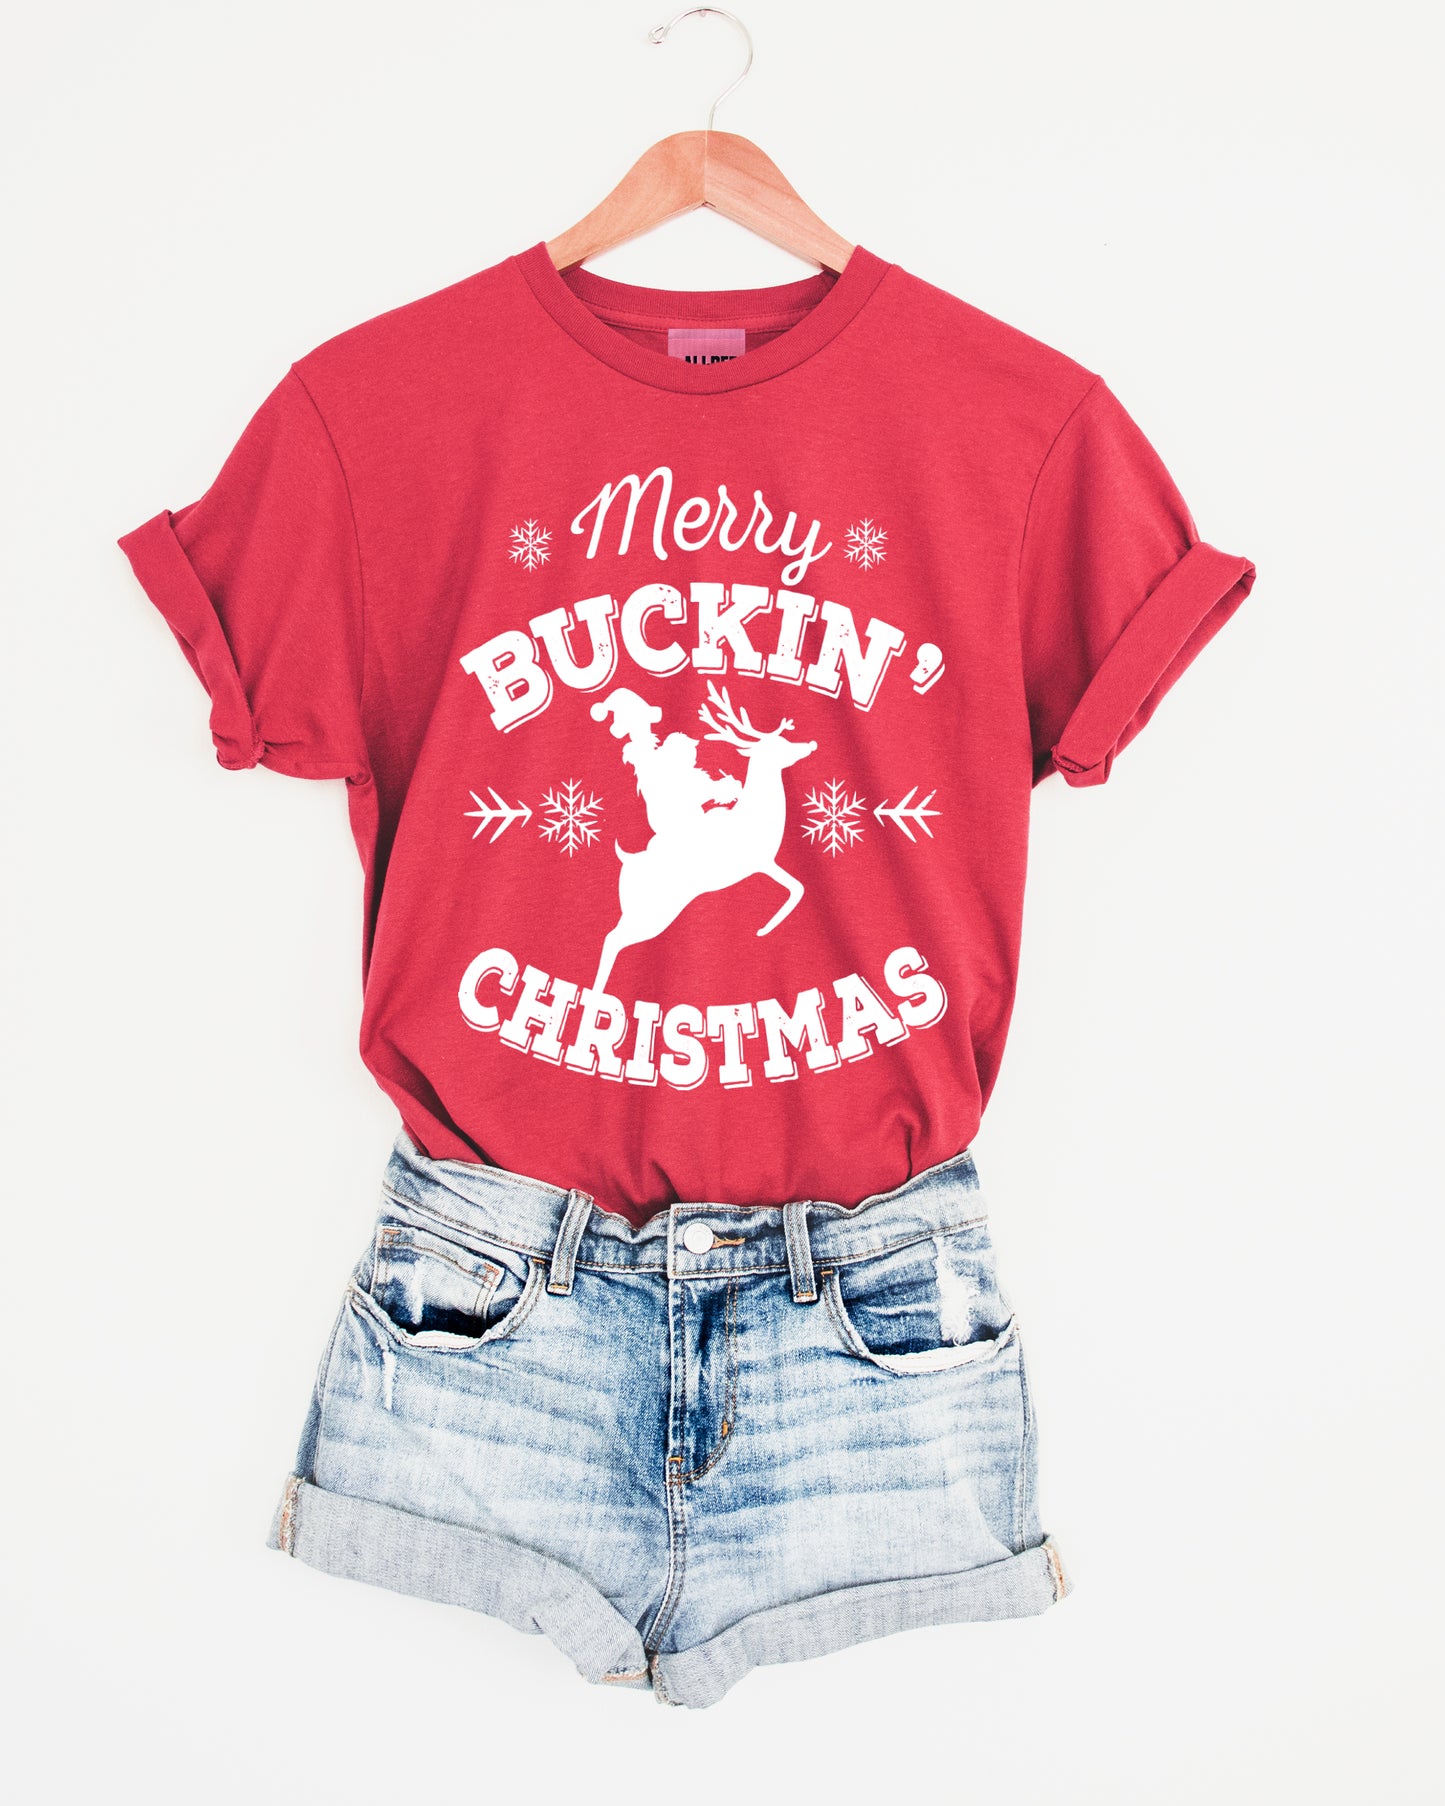 Merry Buckin Christmas Western Christmas Graphic Tee - Heather Red